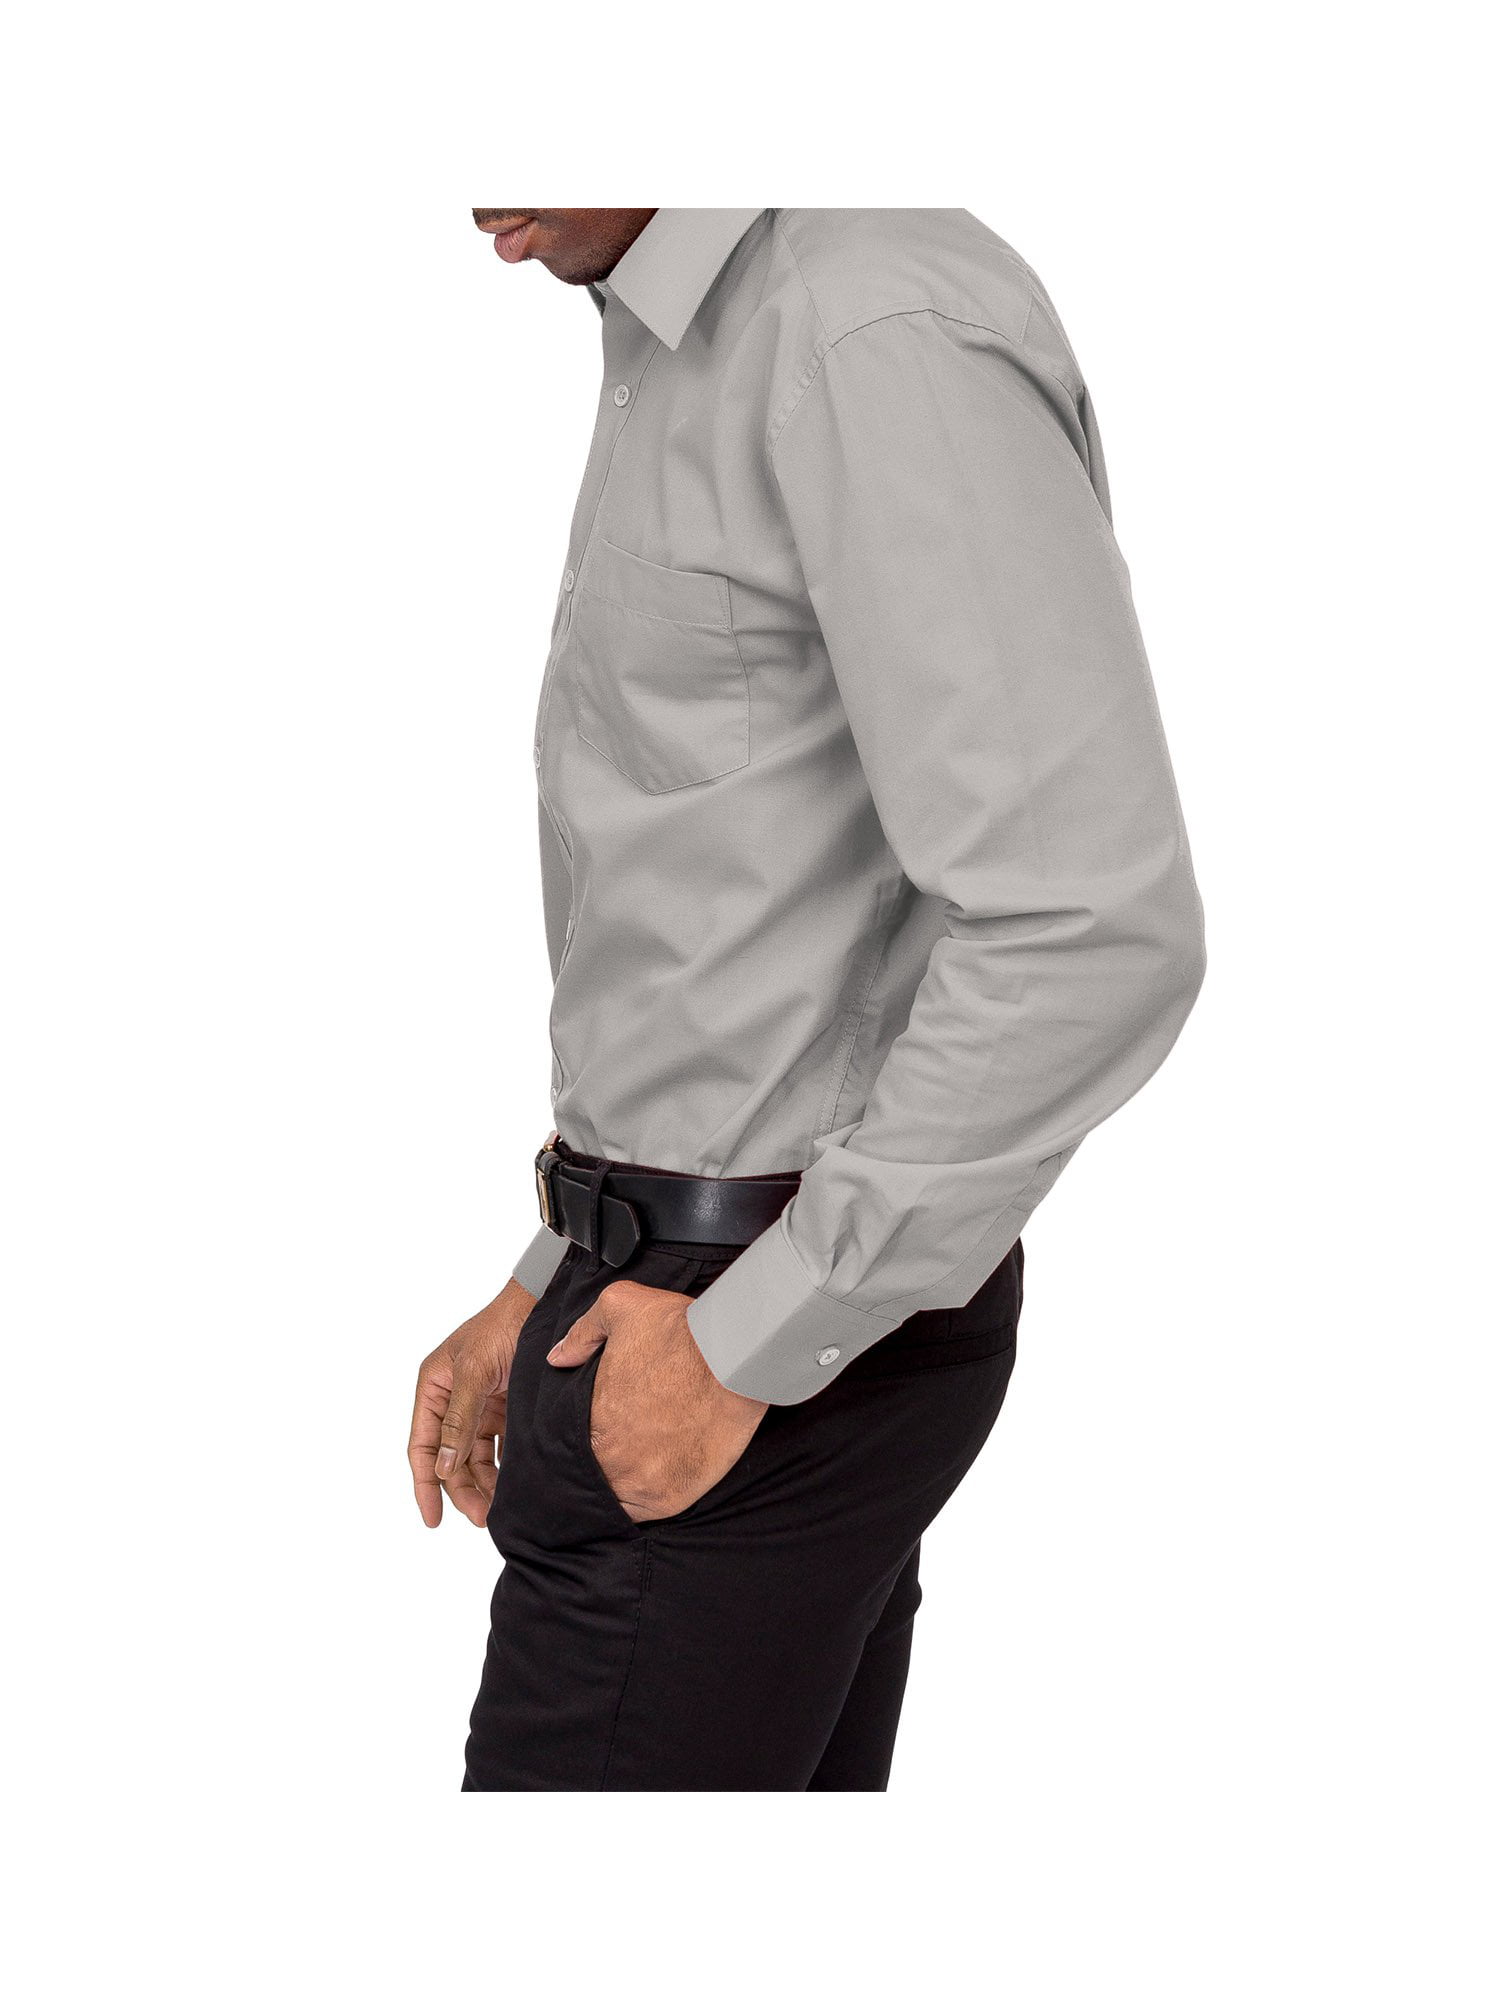 Slim Long-Sleeved Shirt - Ready-to-Wear 1AA56G